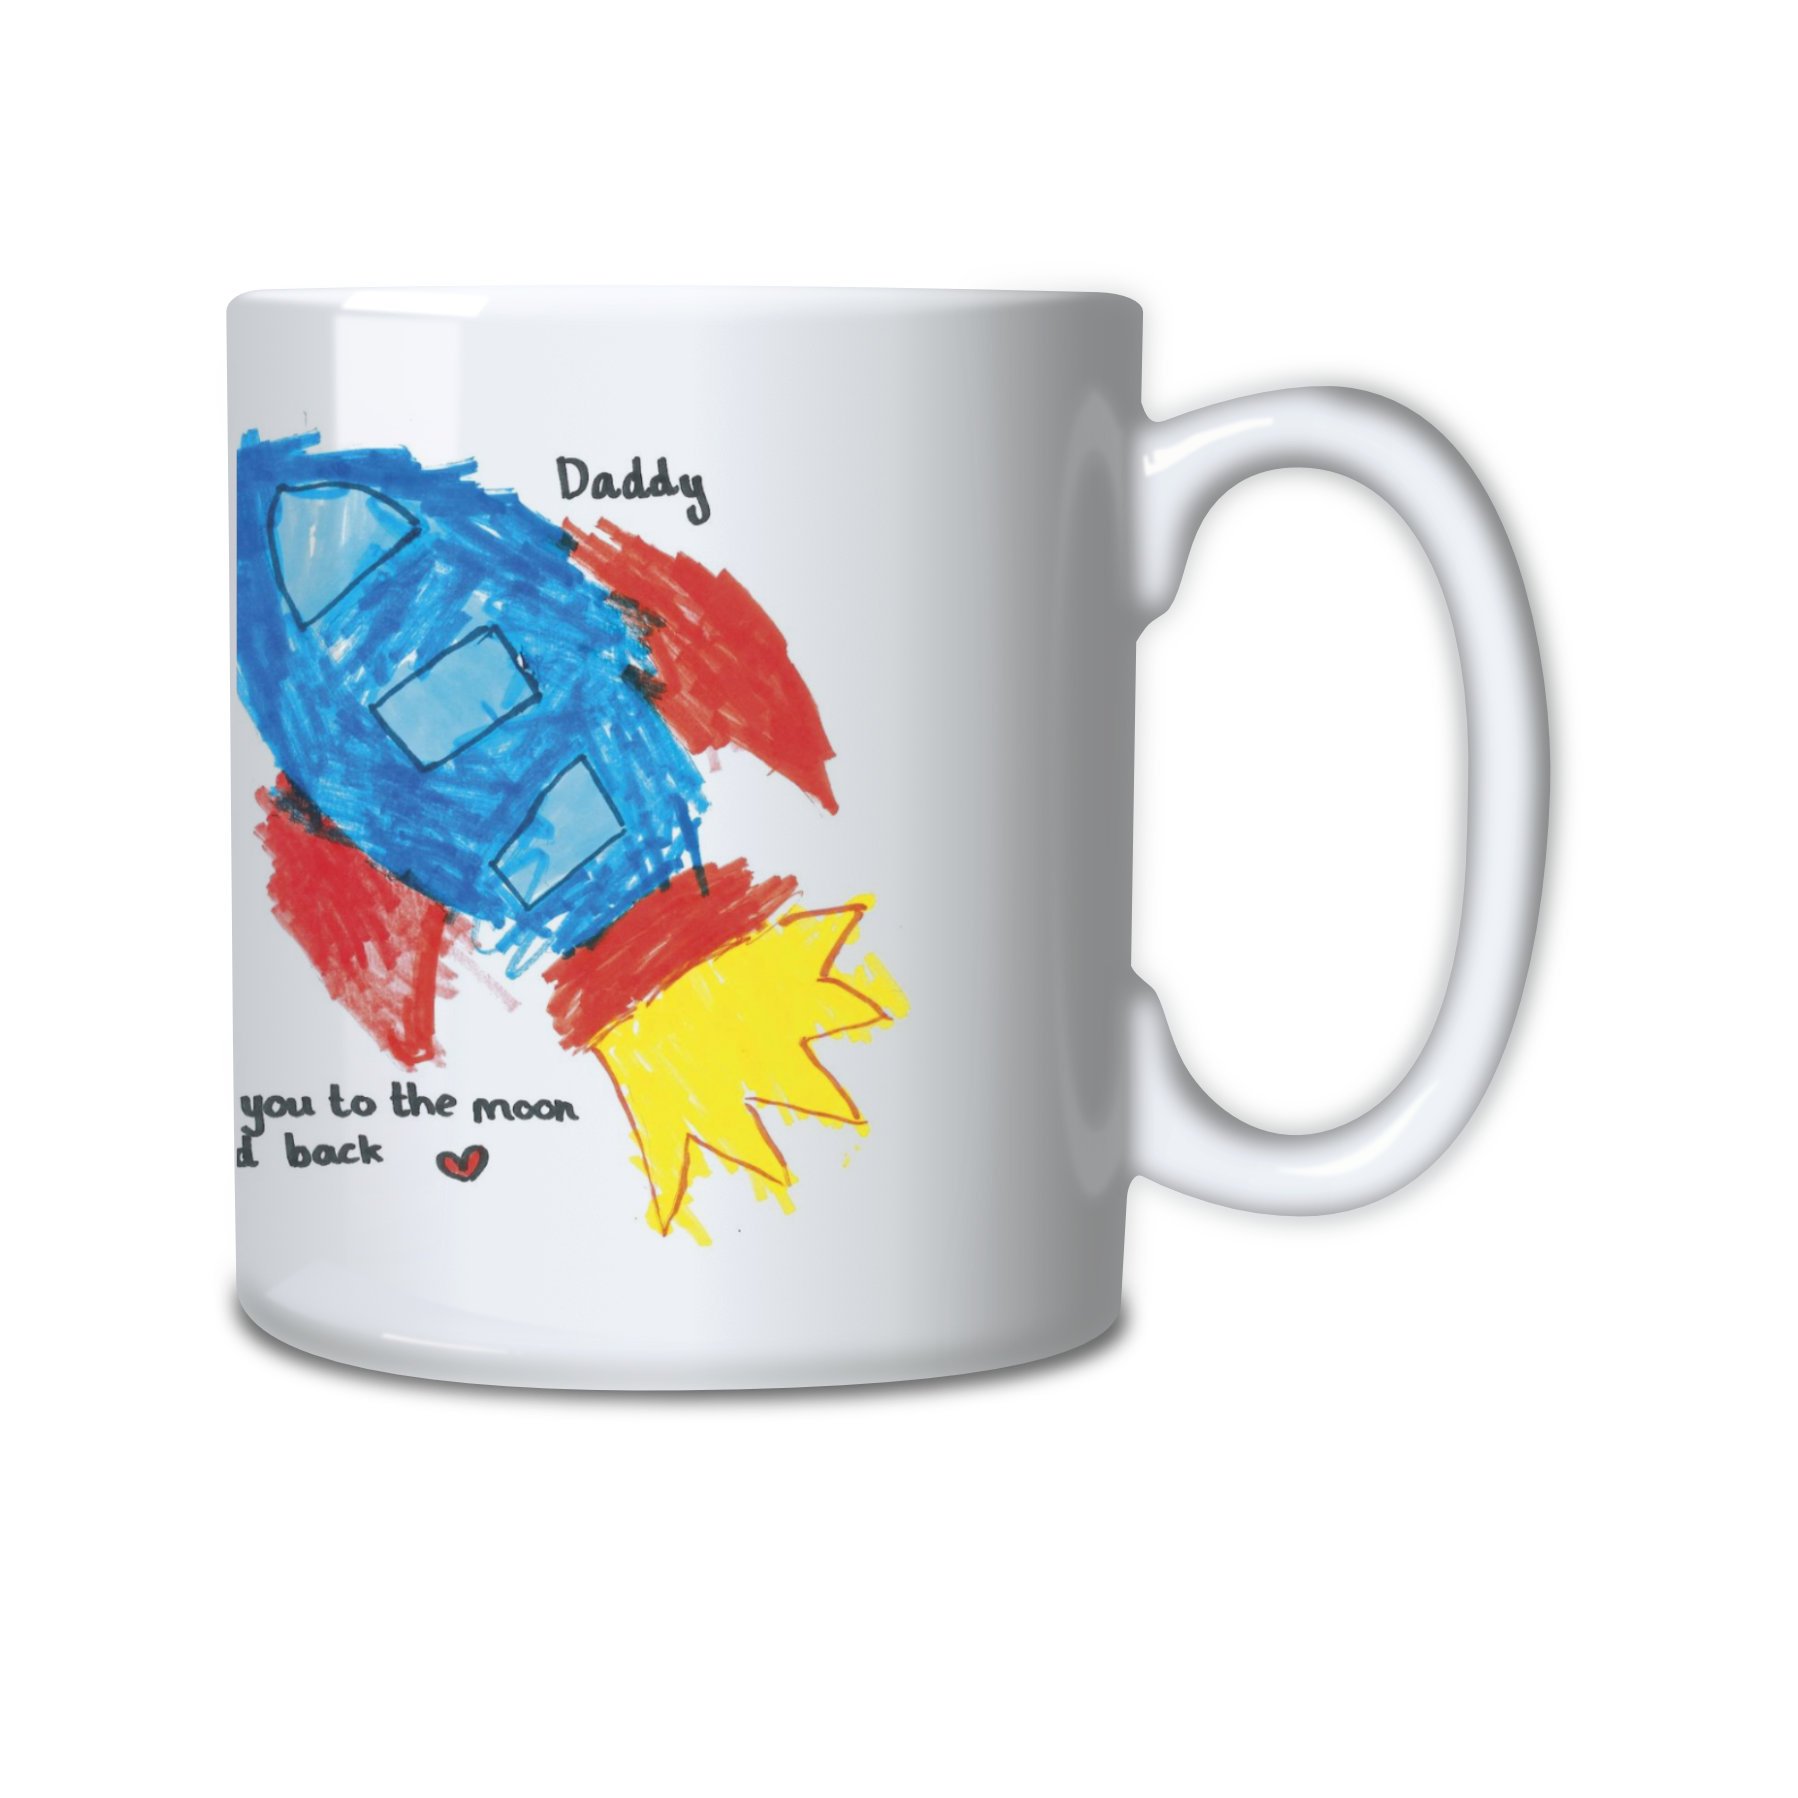 fathers-day-mug@2x.jpg